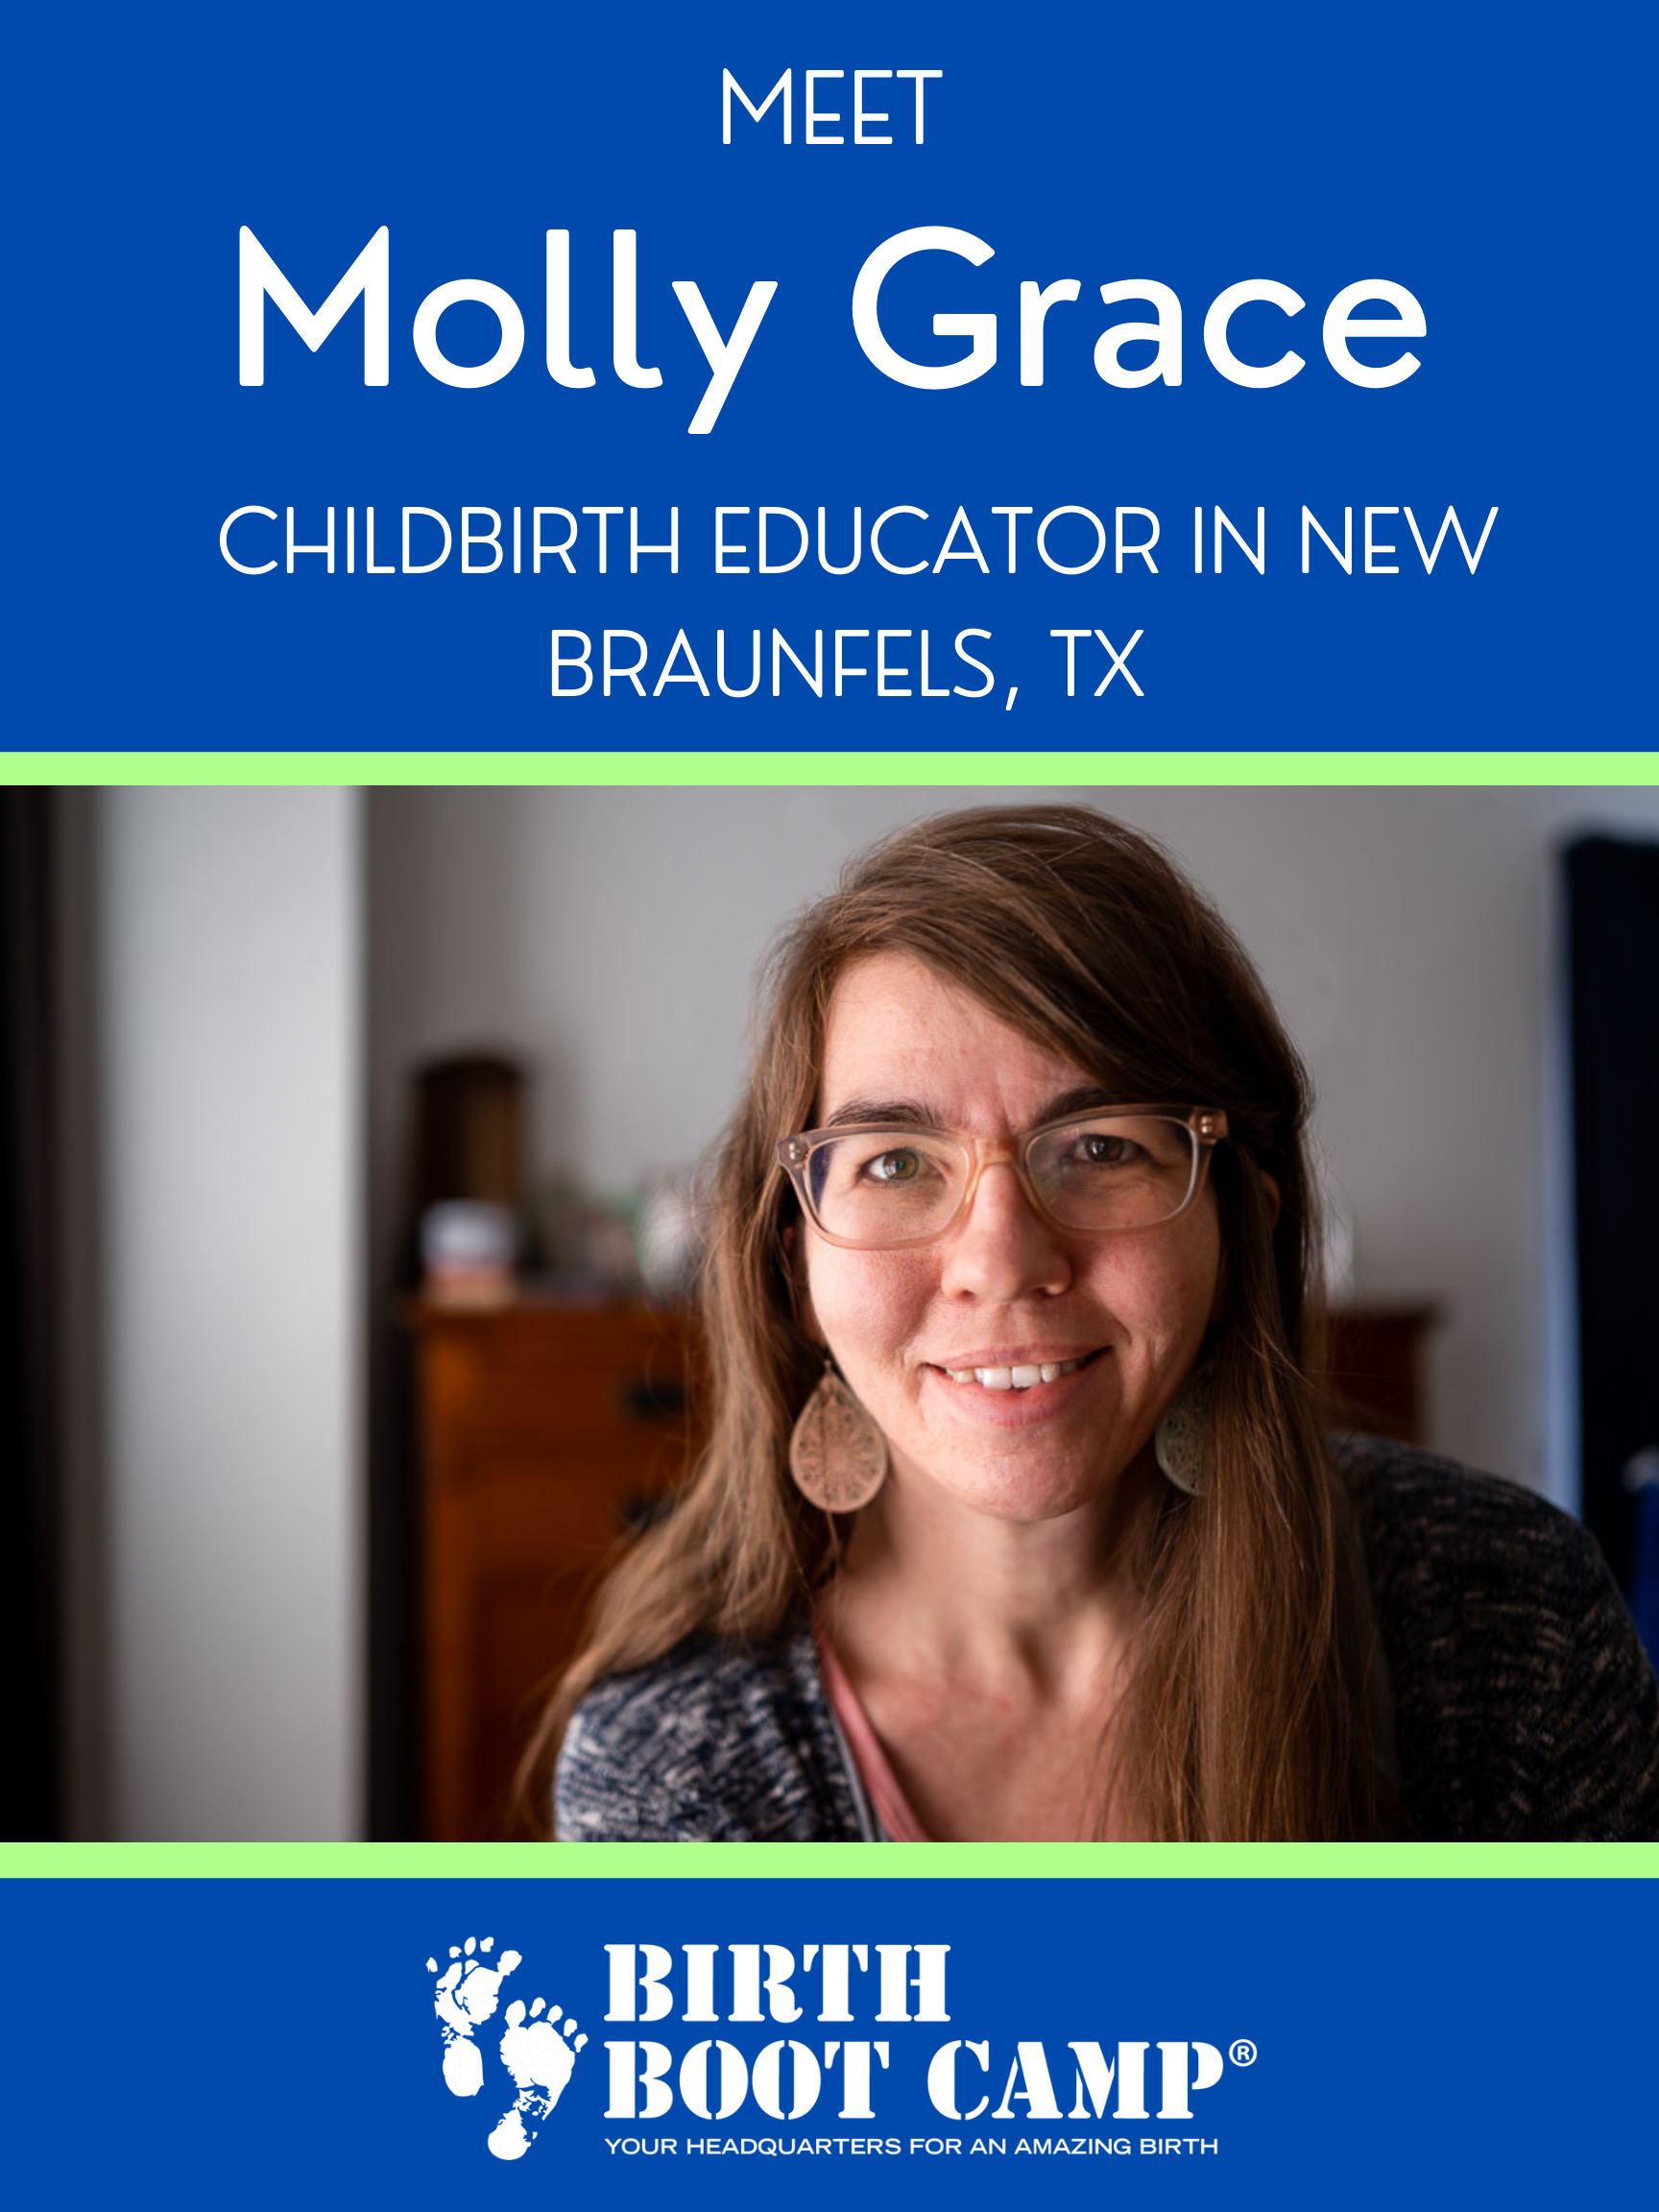 Meet Molly Grace – Childbirth Educator in New Braunfels, TX